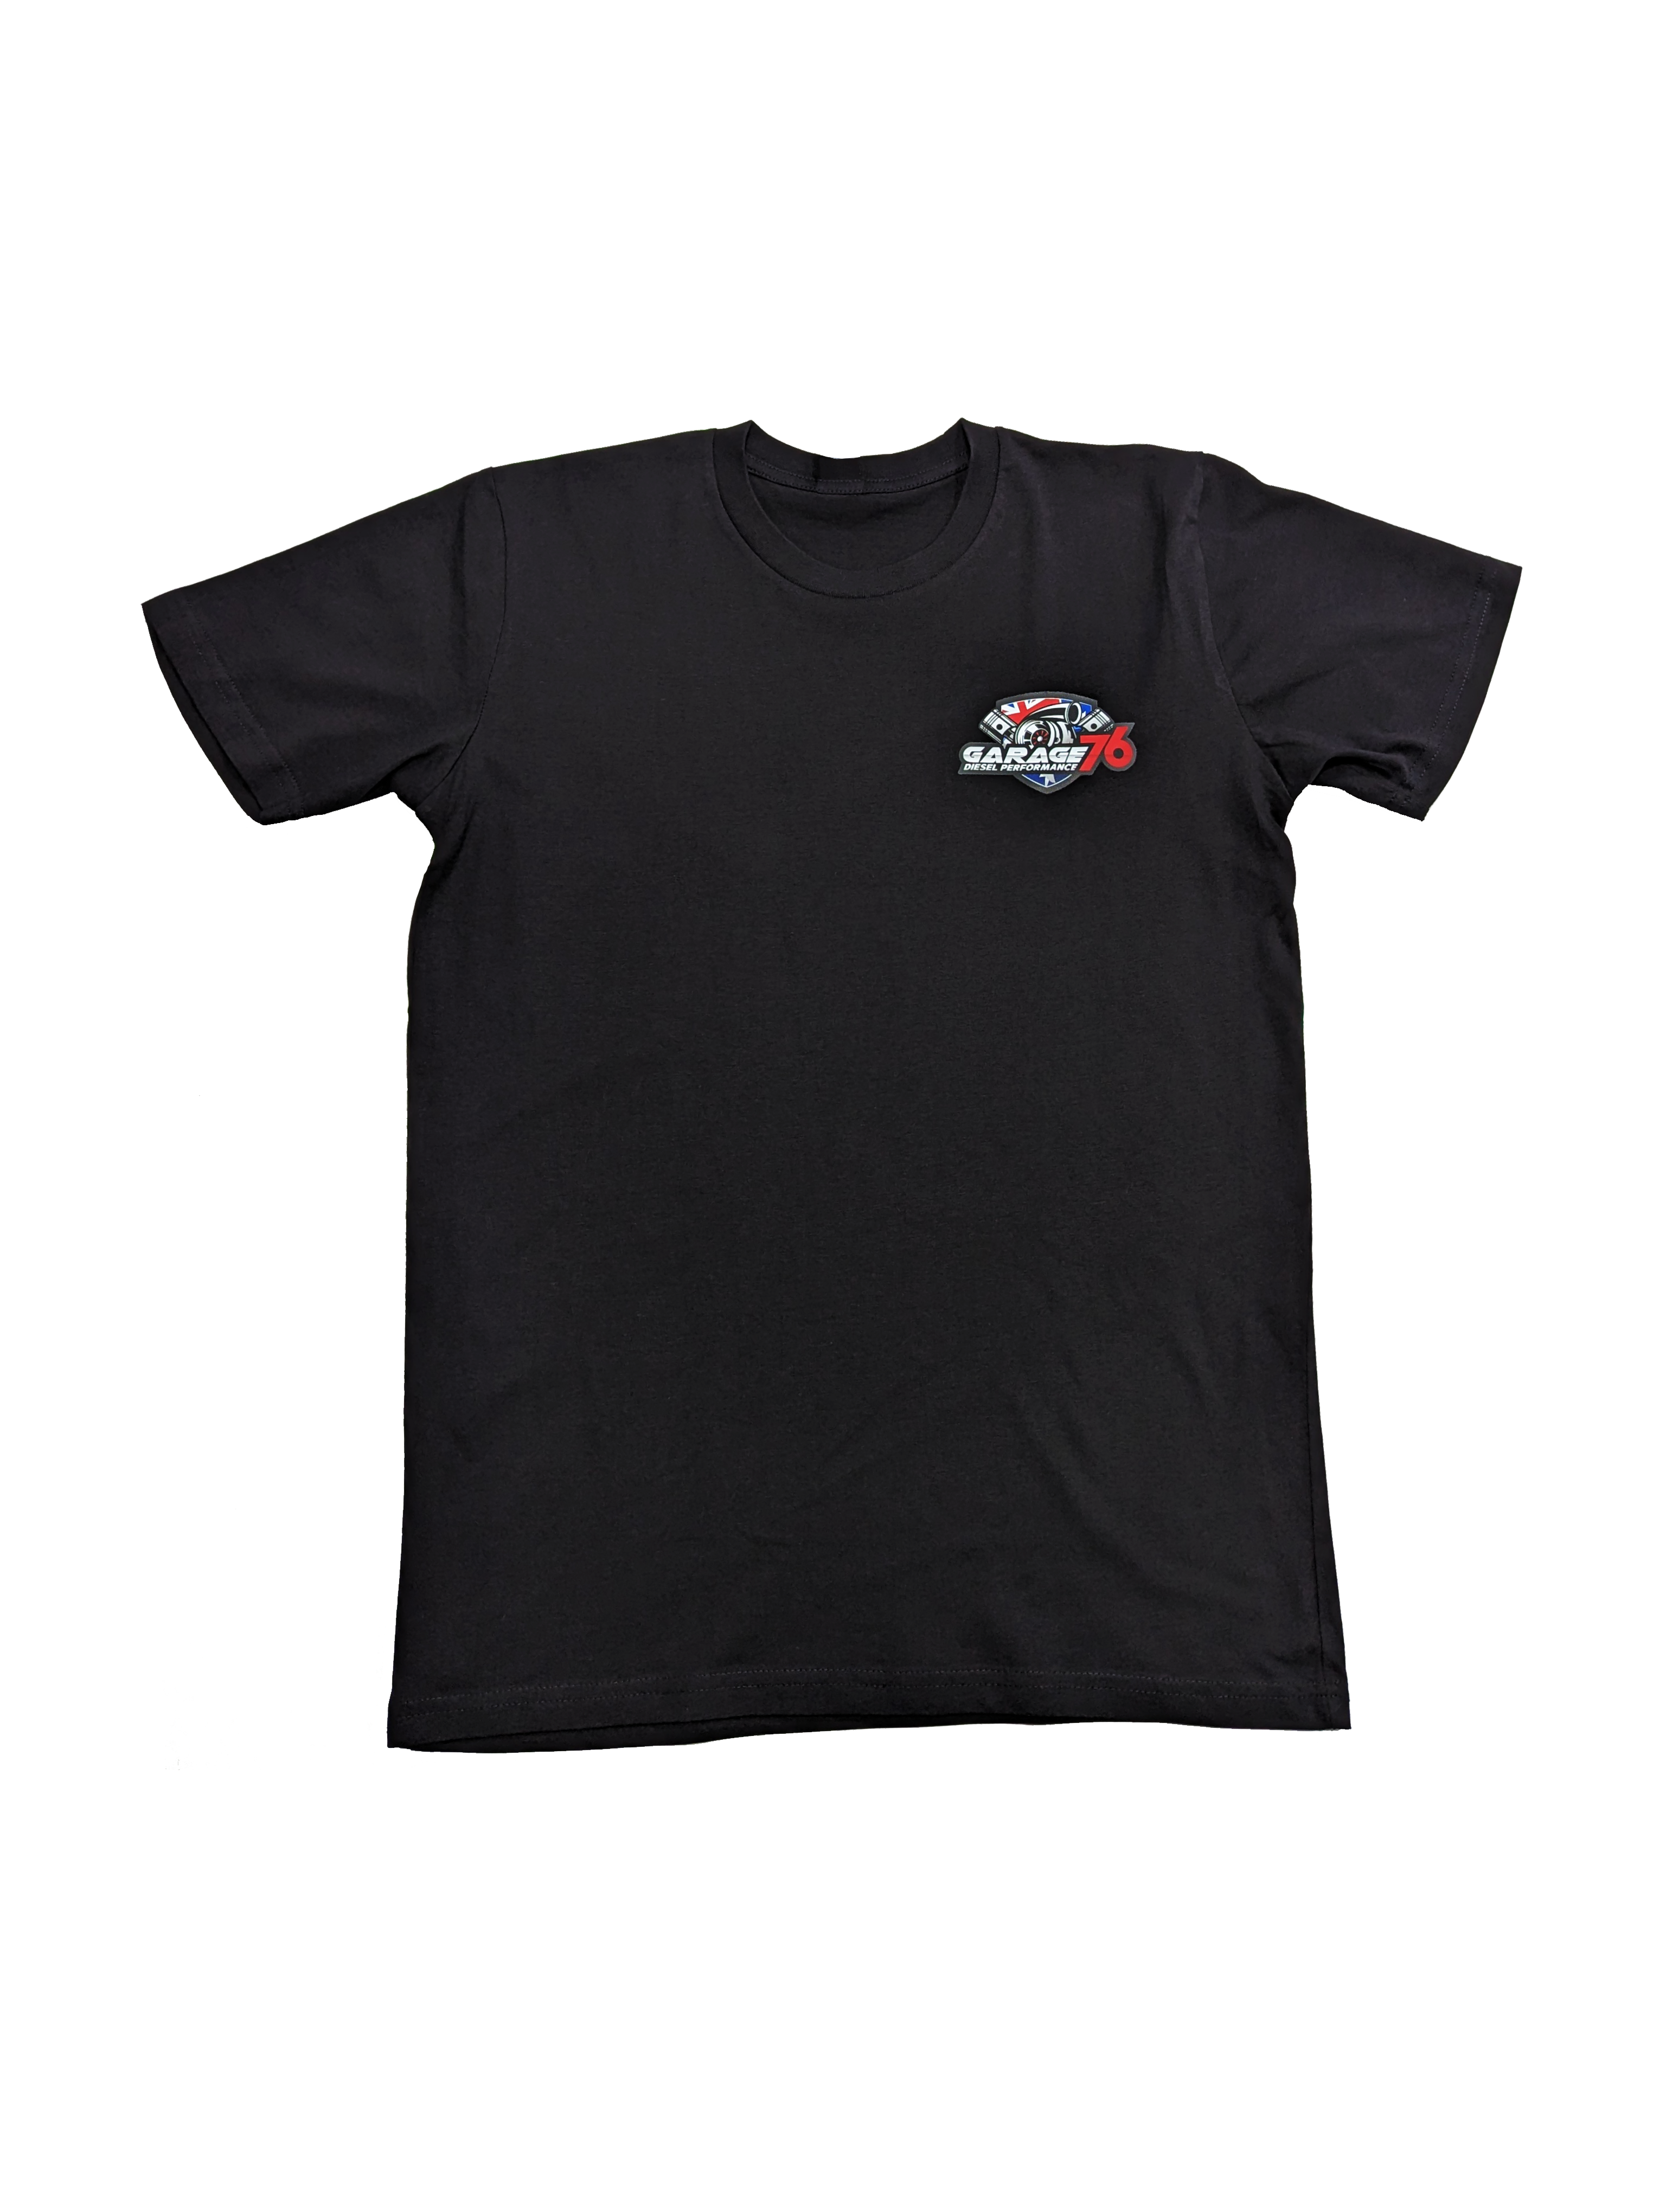 G76 Diesel Performance T-Shirt - Black